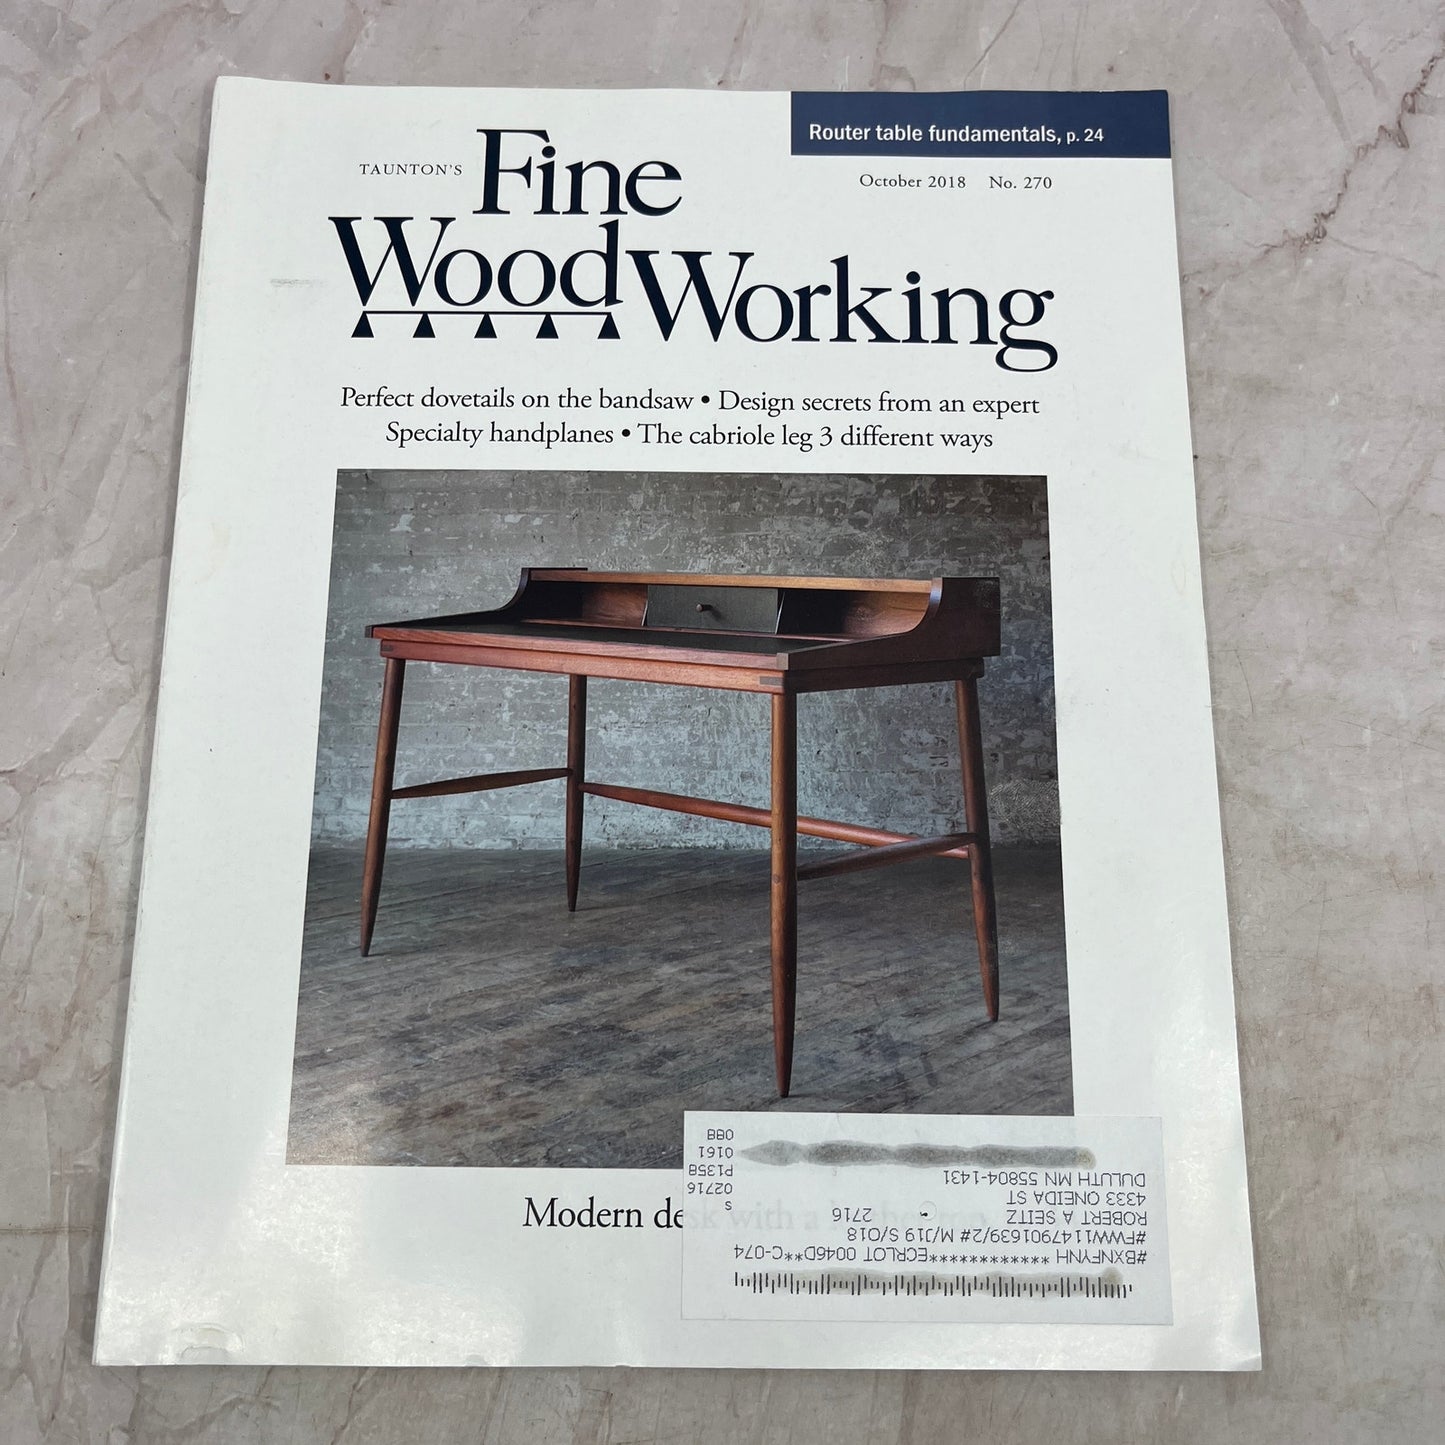 Modern Leather Top Desk - Oct 2018 No 270 - Fine Woodworking Magazine M36